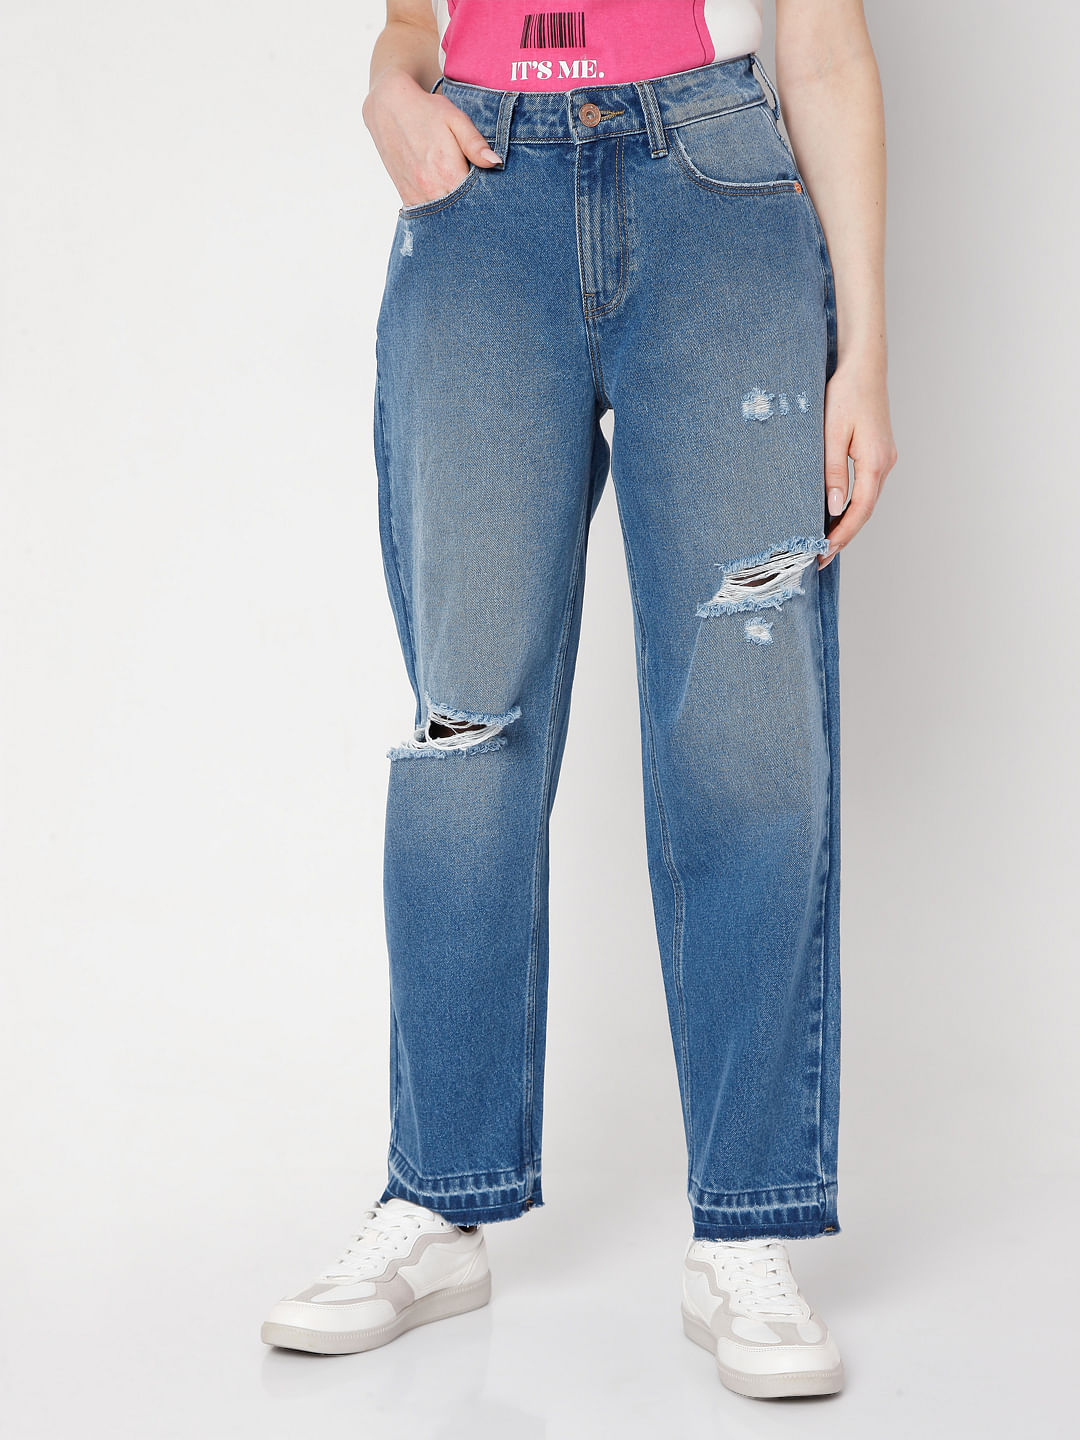 Best Offers on Boyfriend jeans for women upto 2071 off  Limited period  sale  AJIO